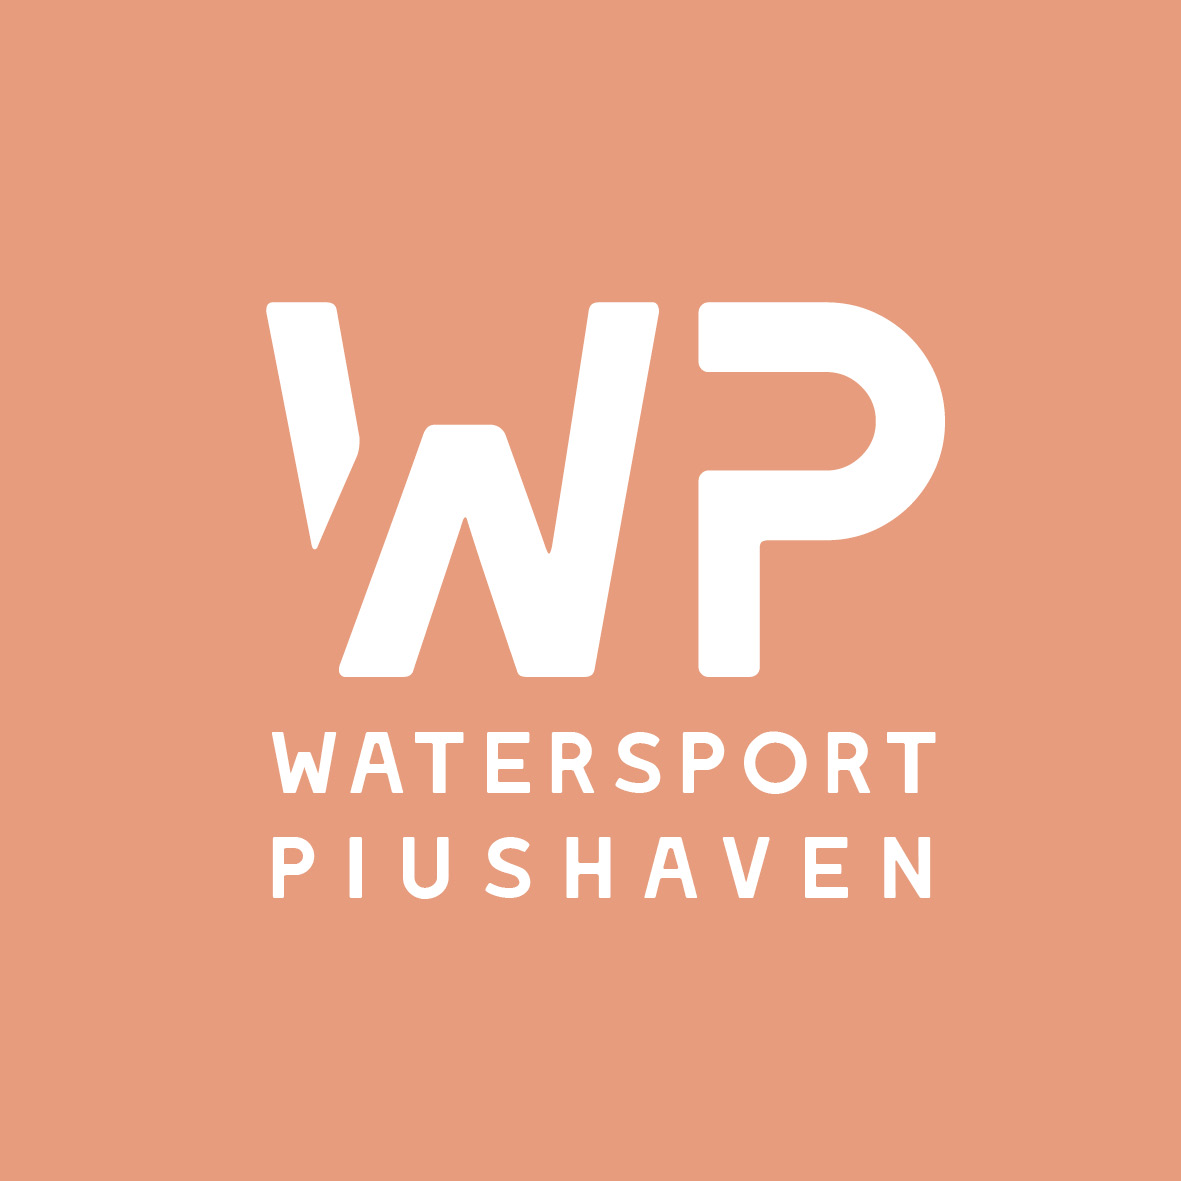 Watersport Piushaven